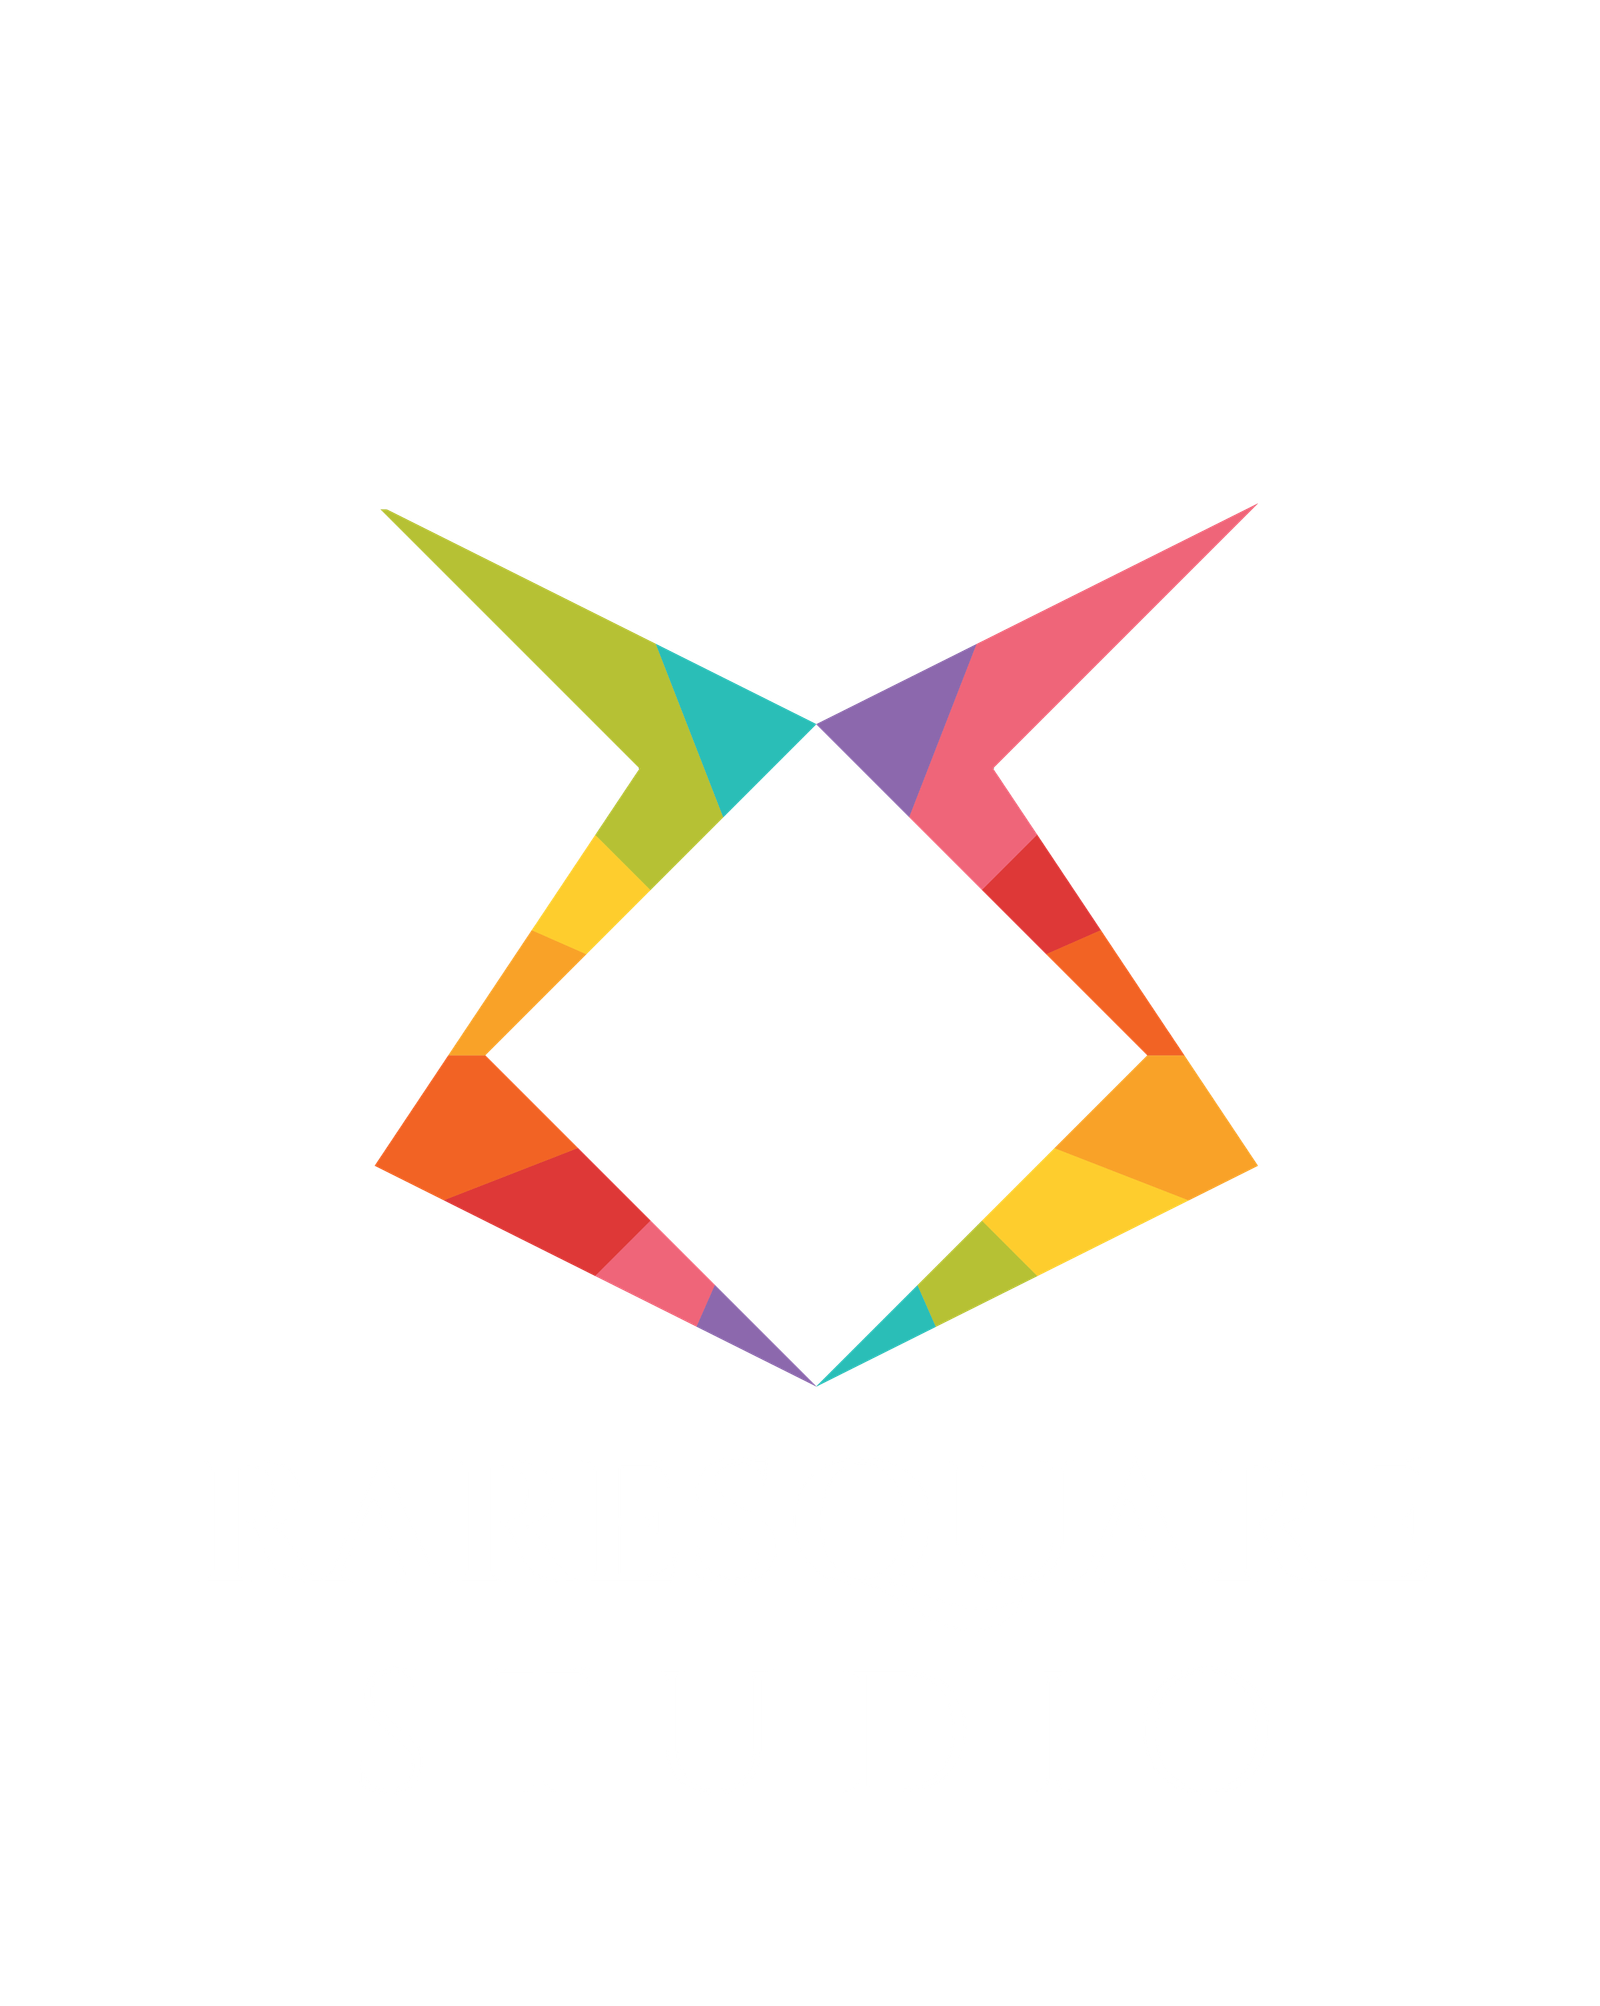 Raresquare Studio